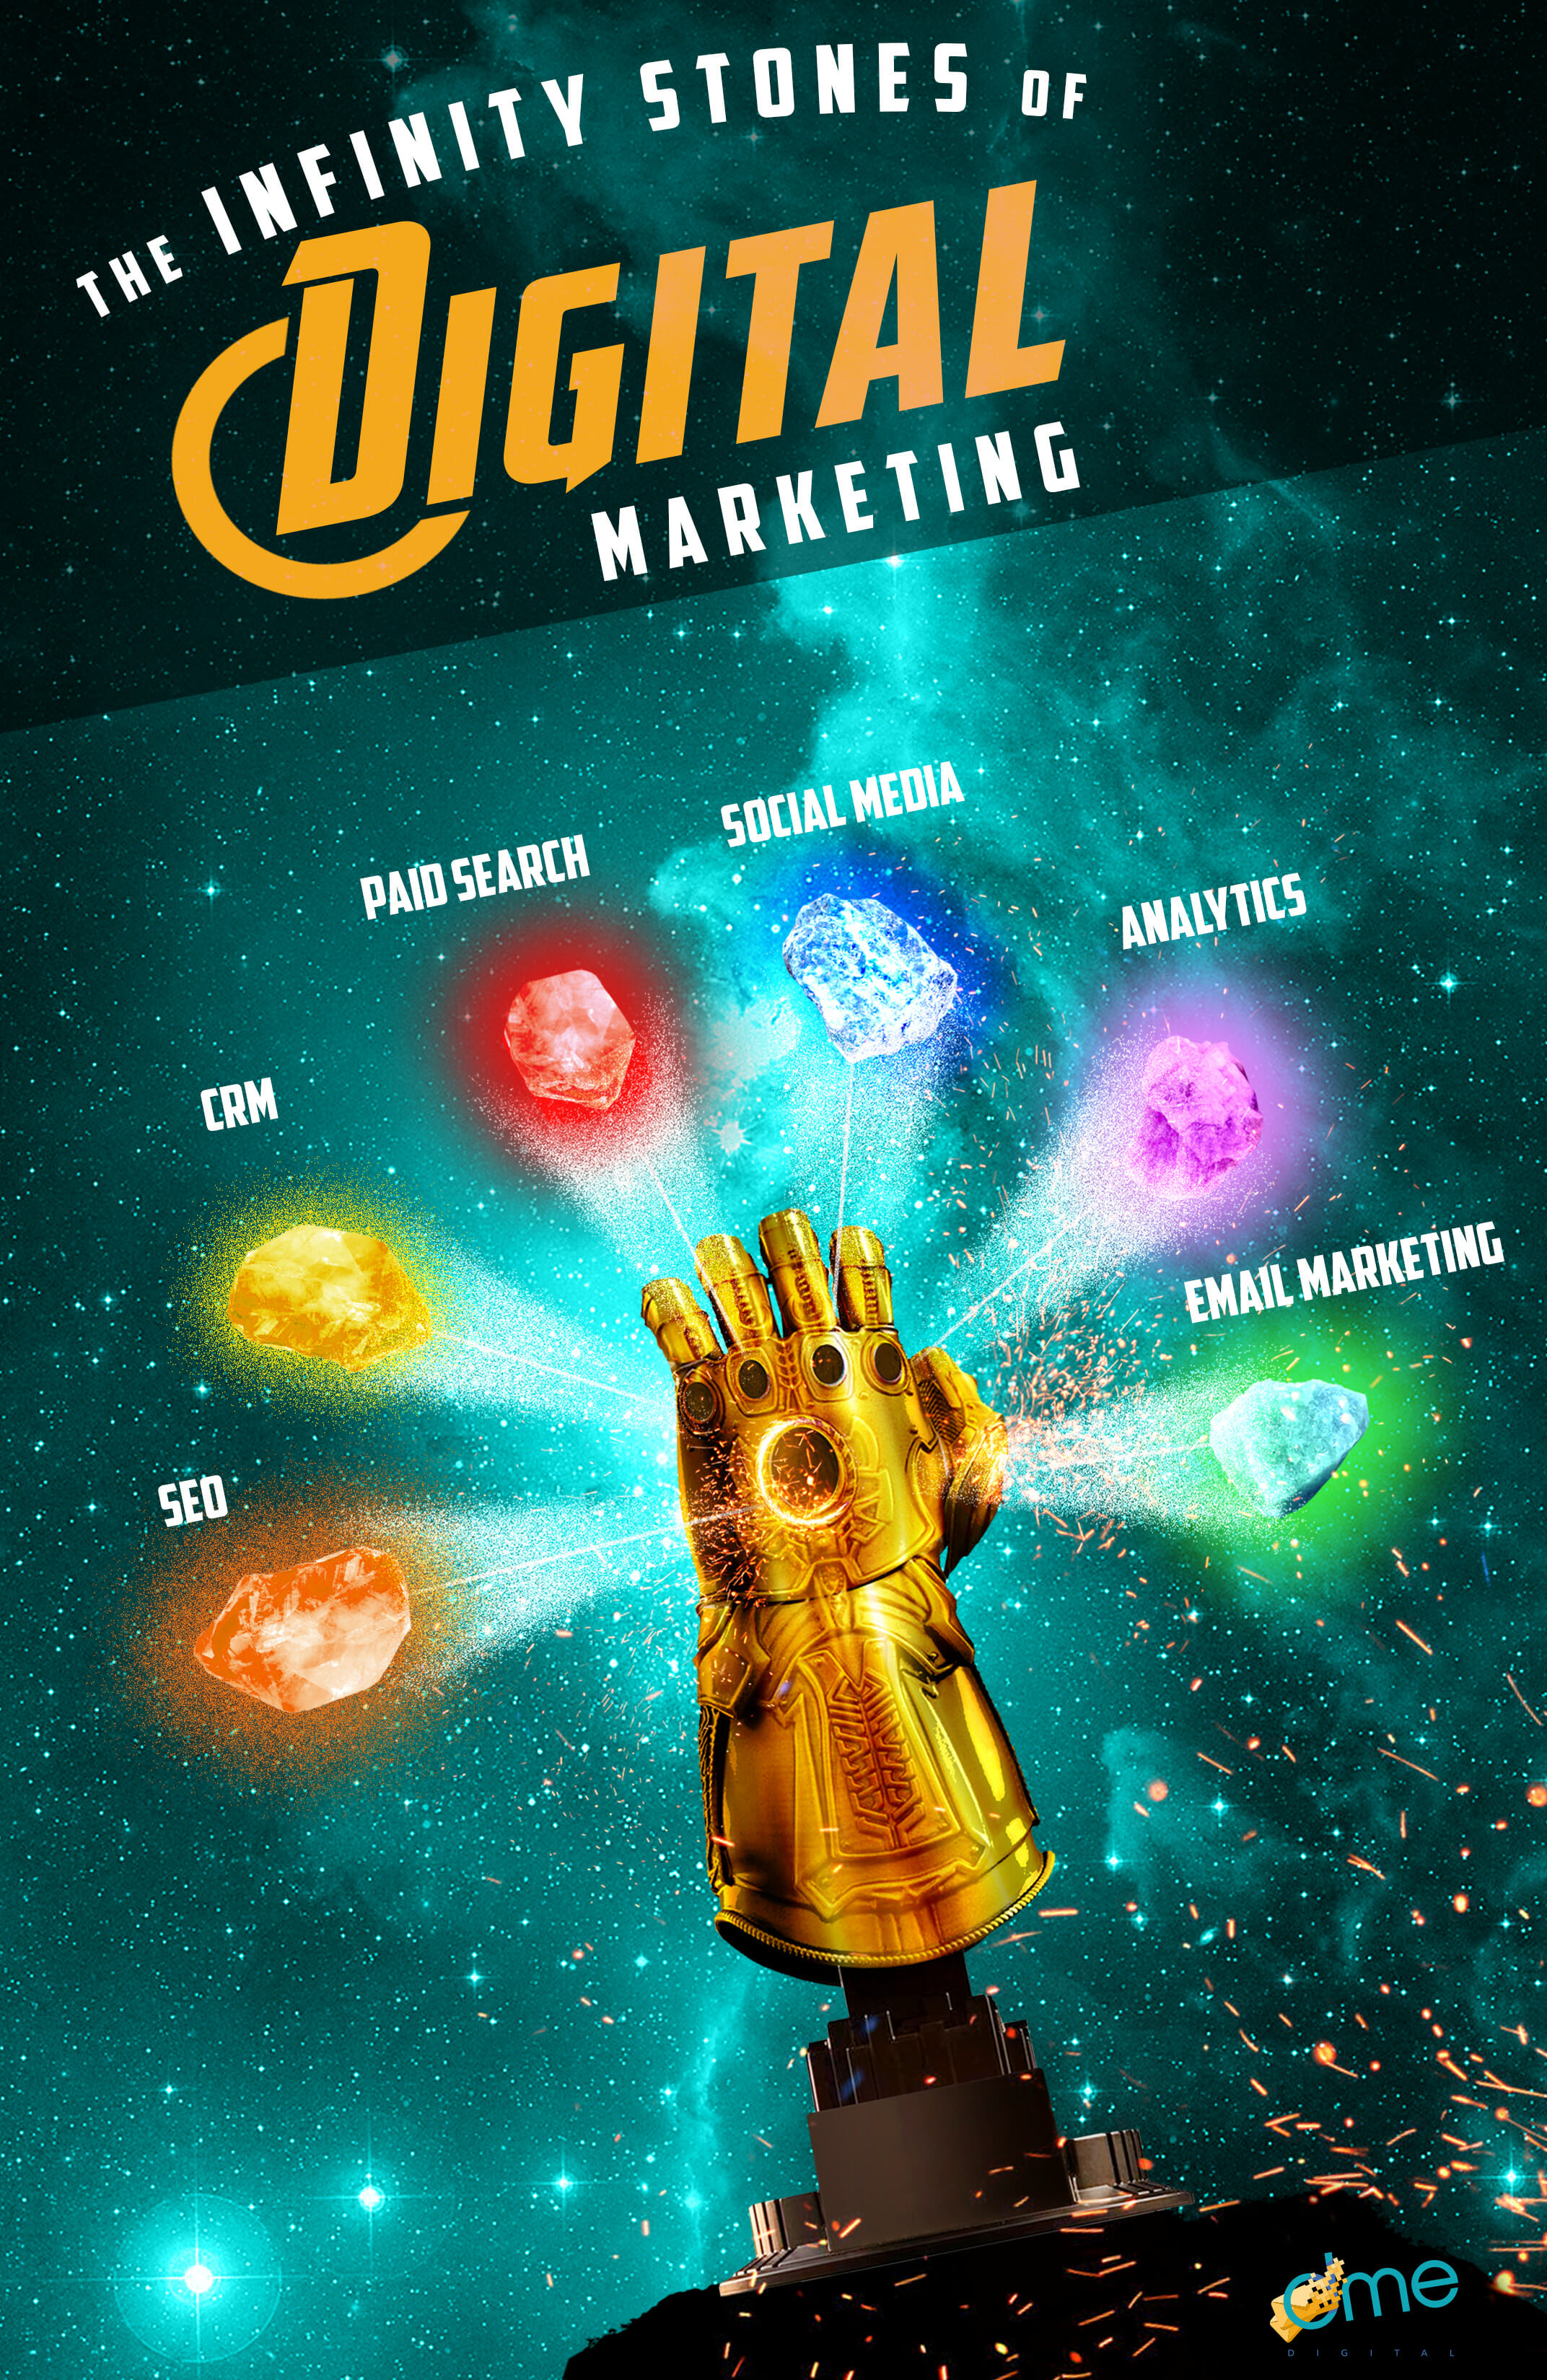 The Six Digital Marketing Infinity Stones